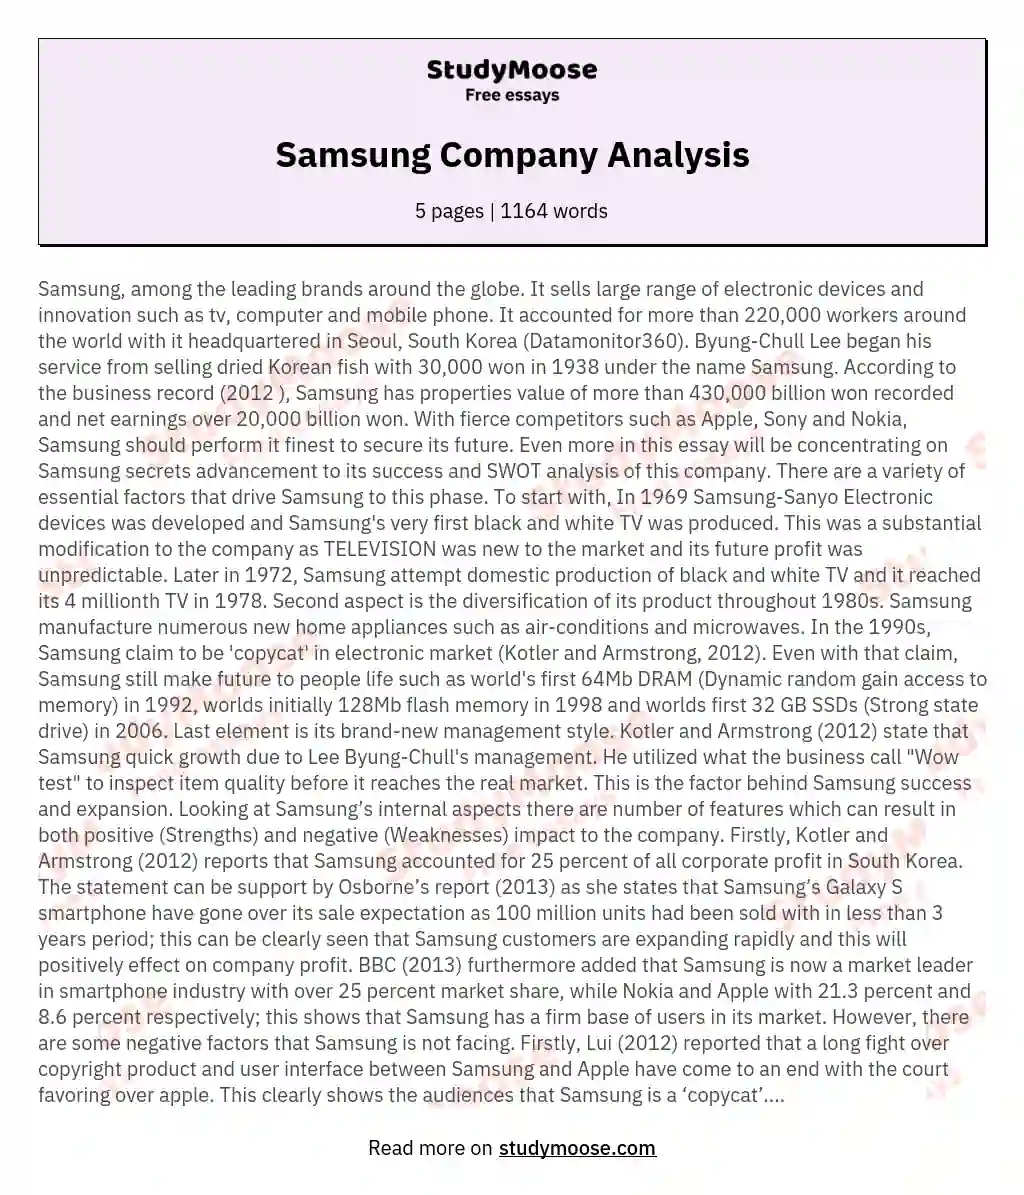 Samsung Company Analysis essay